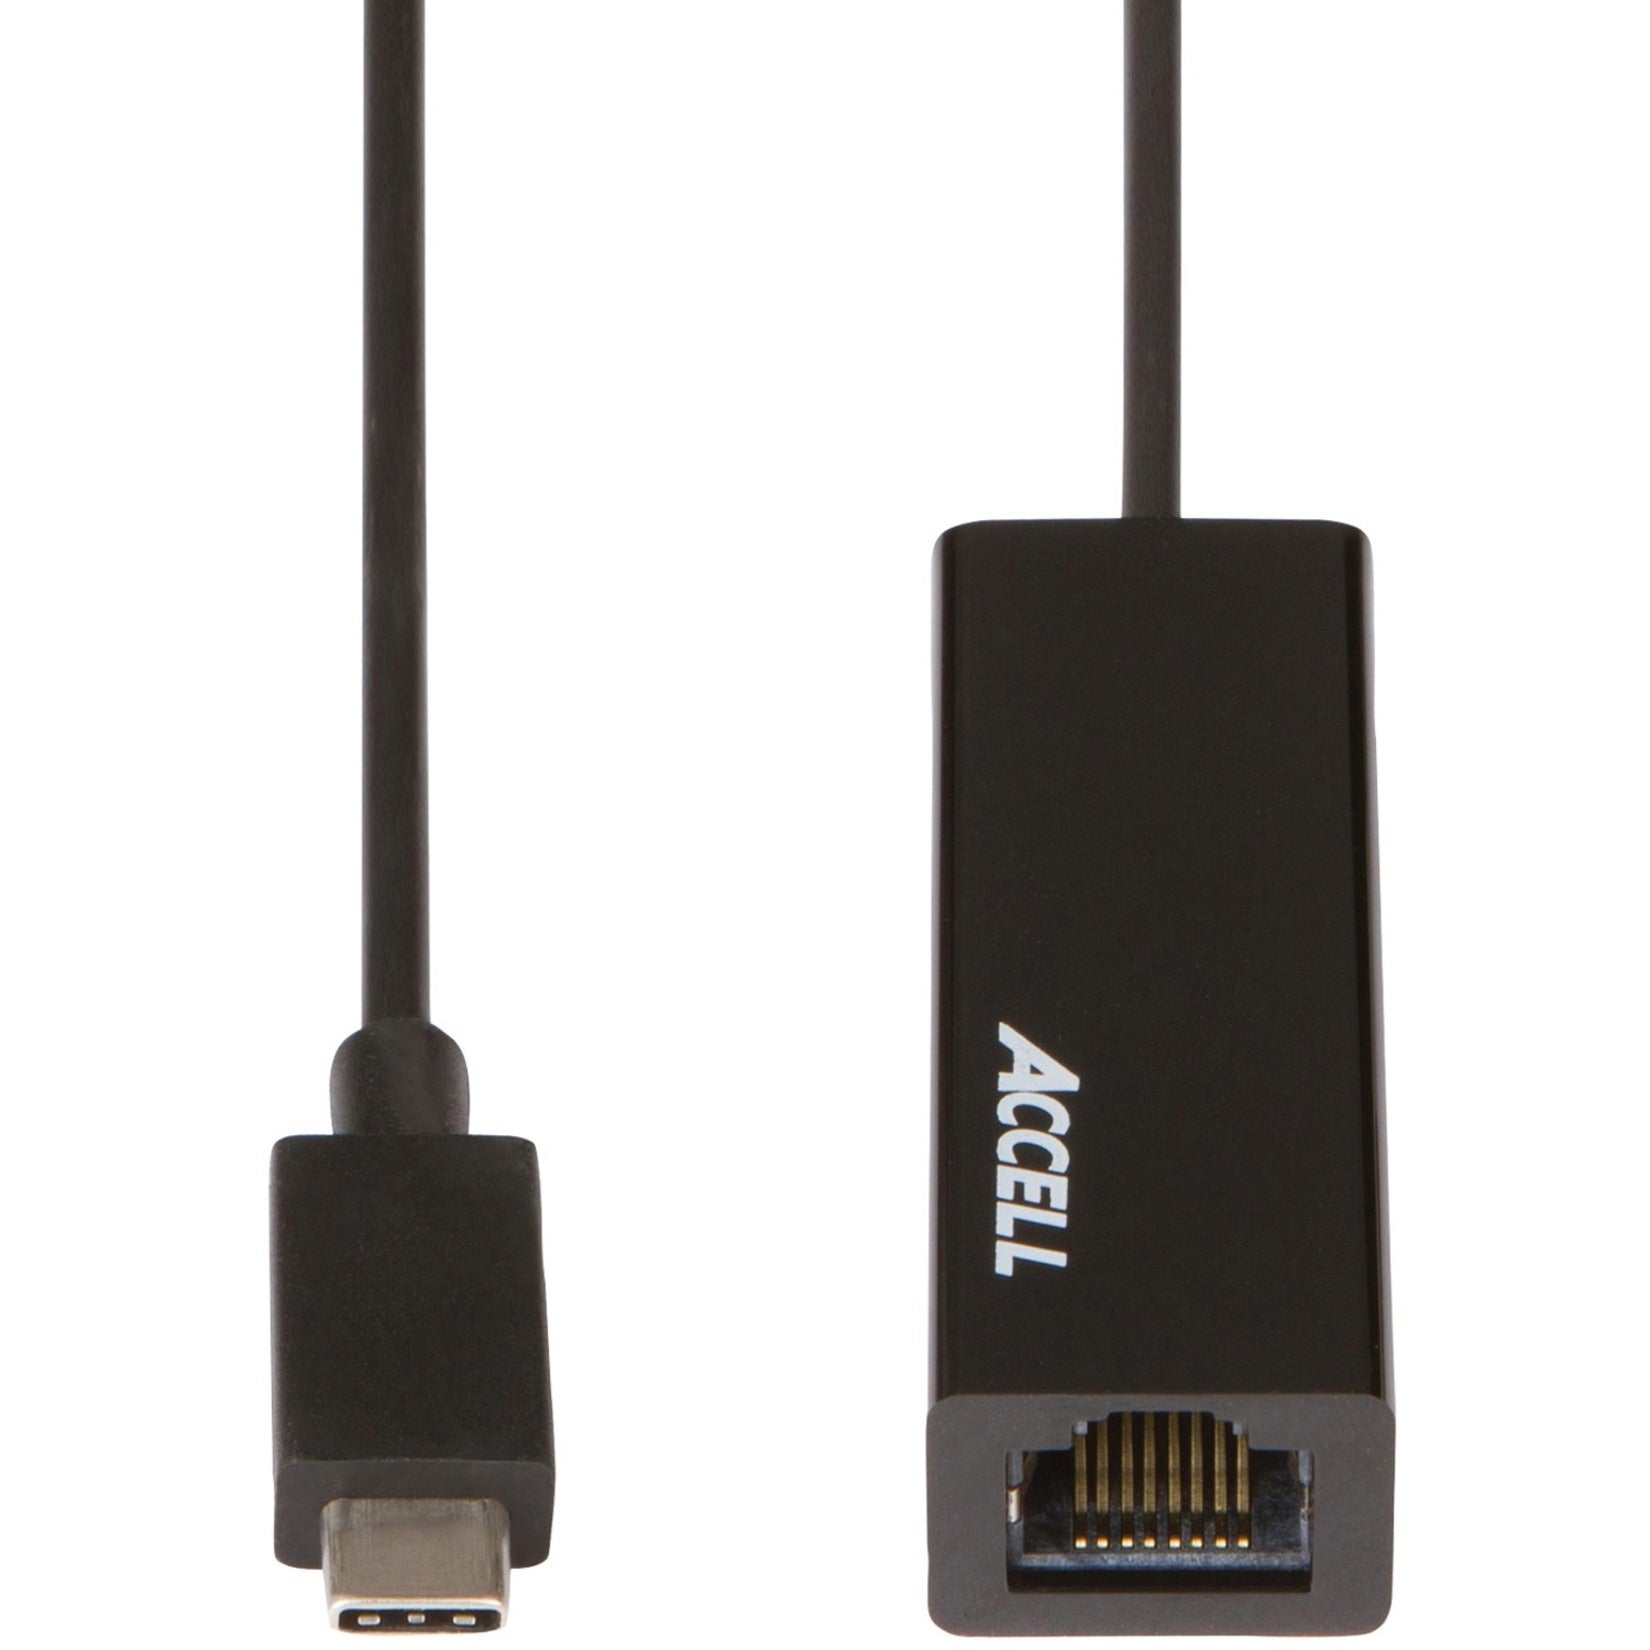 Accell U187B-001B USB-C到千兆以太网适配器，2年保修，USB 3.0，双绞线，10/100/1000Base-T 品牌名：Accell海盗船  Accell U187B-001B USB-C到千兆以太网适配器，2年保修，USB 3.0，双绞线，10/100/1000Base-T